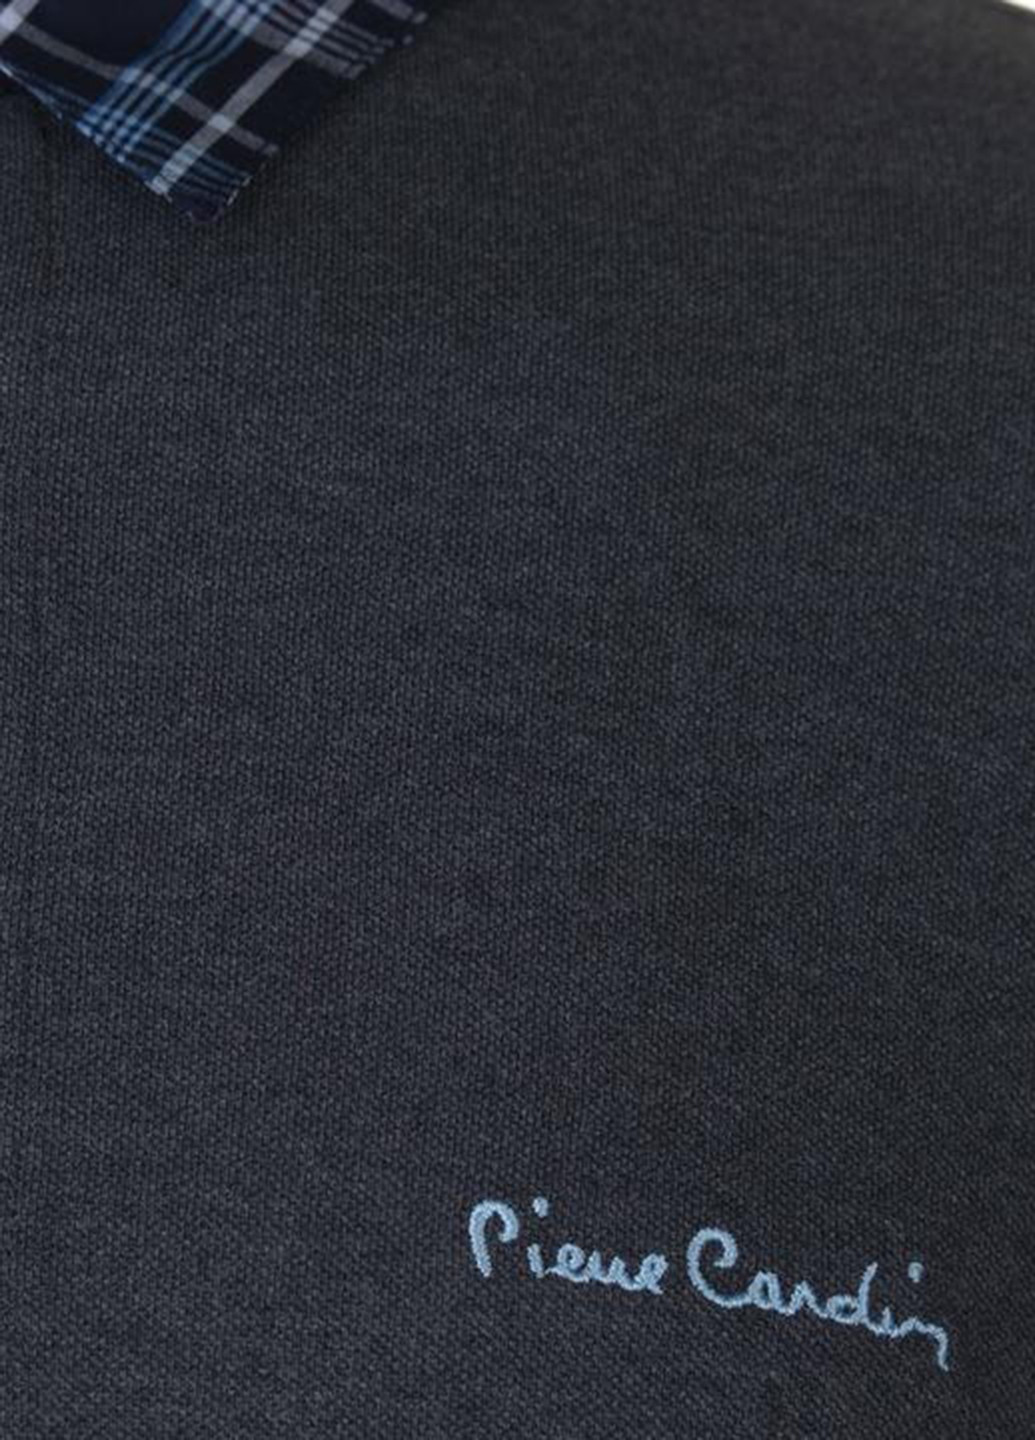 Темно-серая футболка-поло для мужчин Pierre Cardin с логотипом